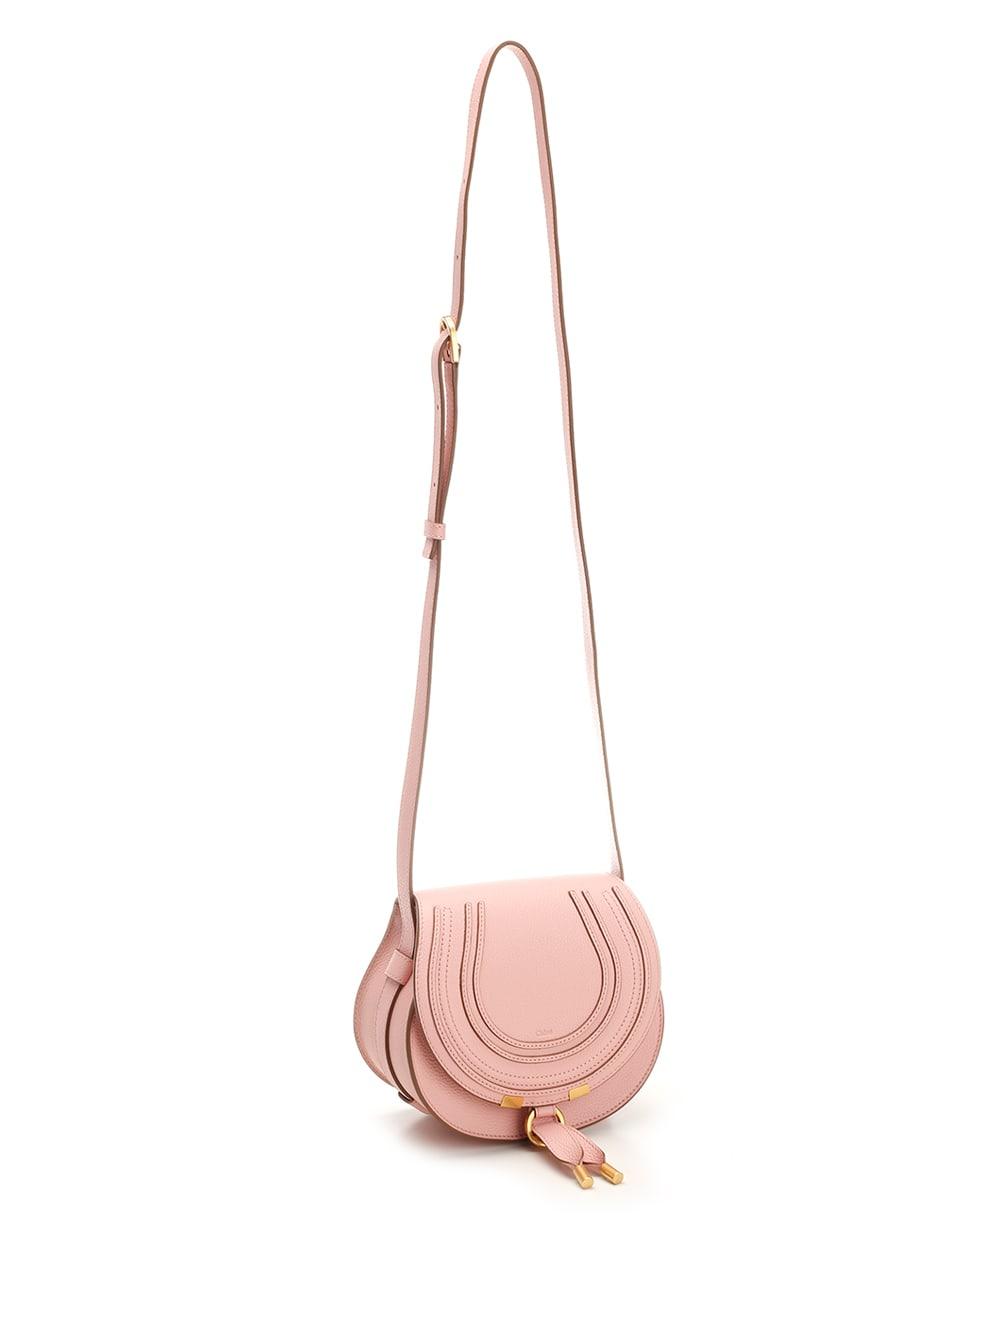 Chloé Pink Small Marcie Bag